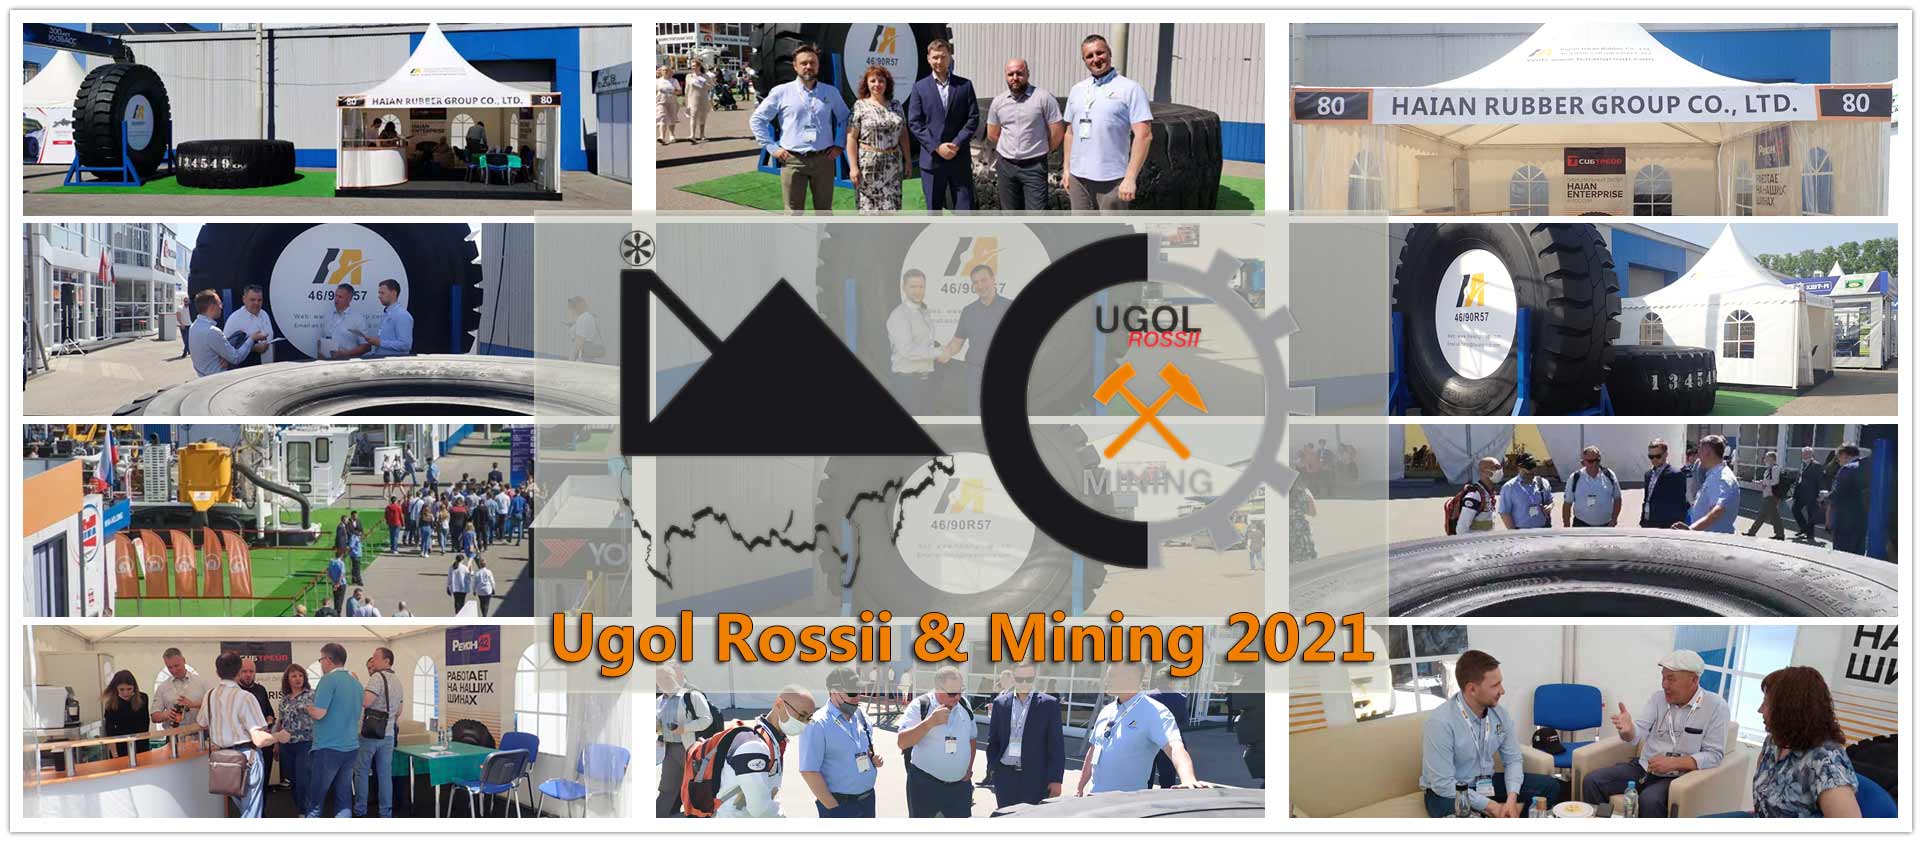 Ugol Rossii & Mining 2021